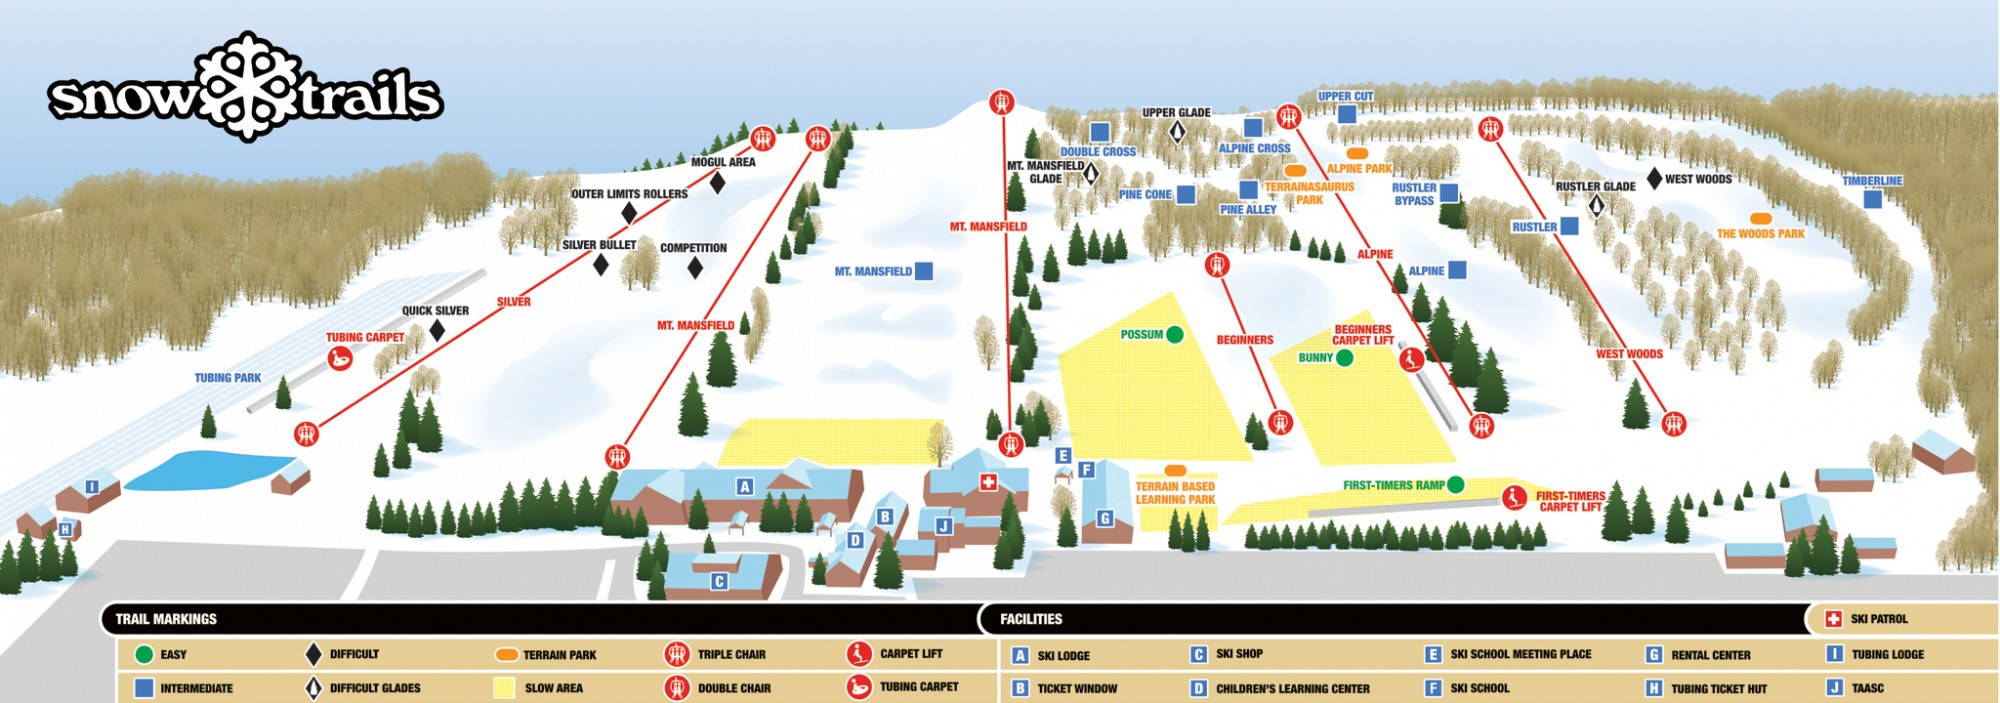 Snow Trails trail map